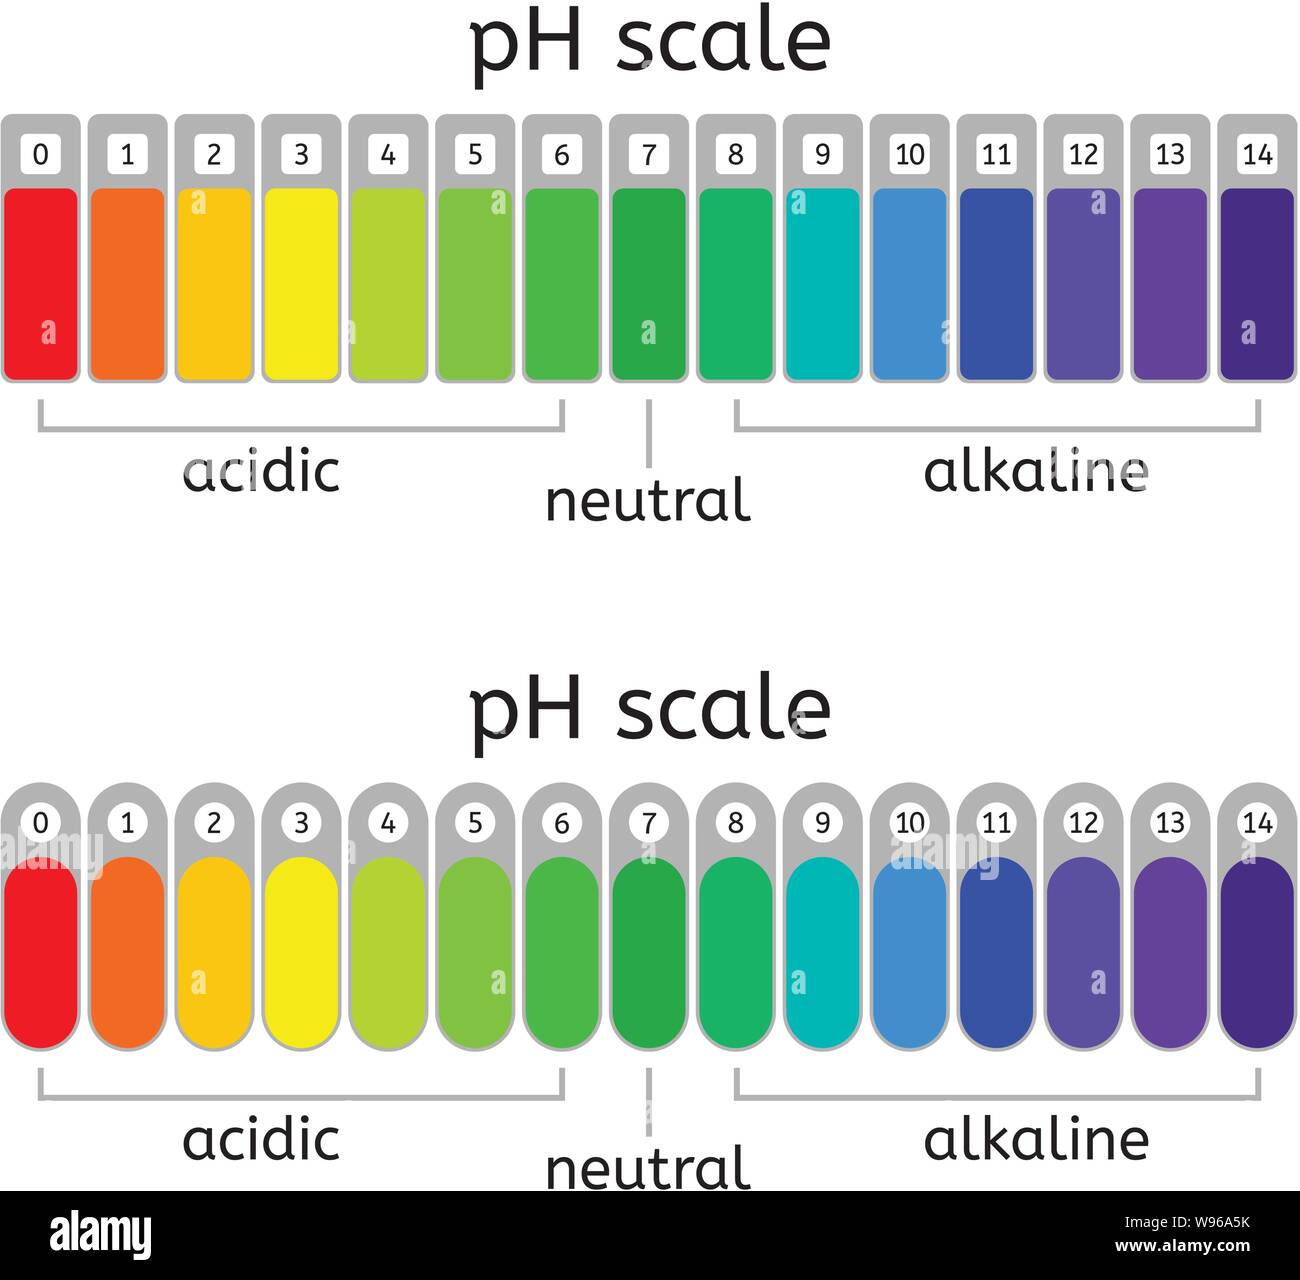 Ph Acid Alkaline Chart